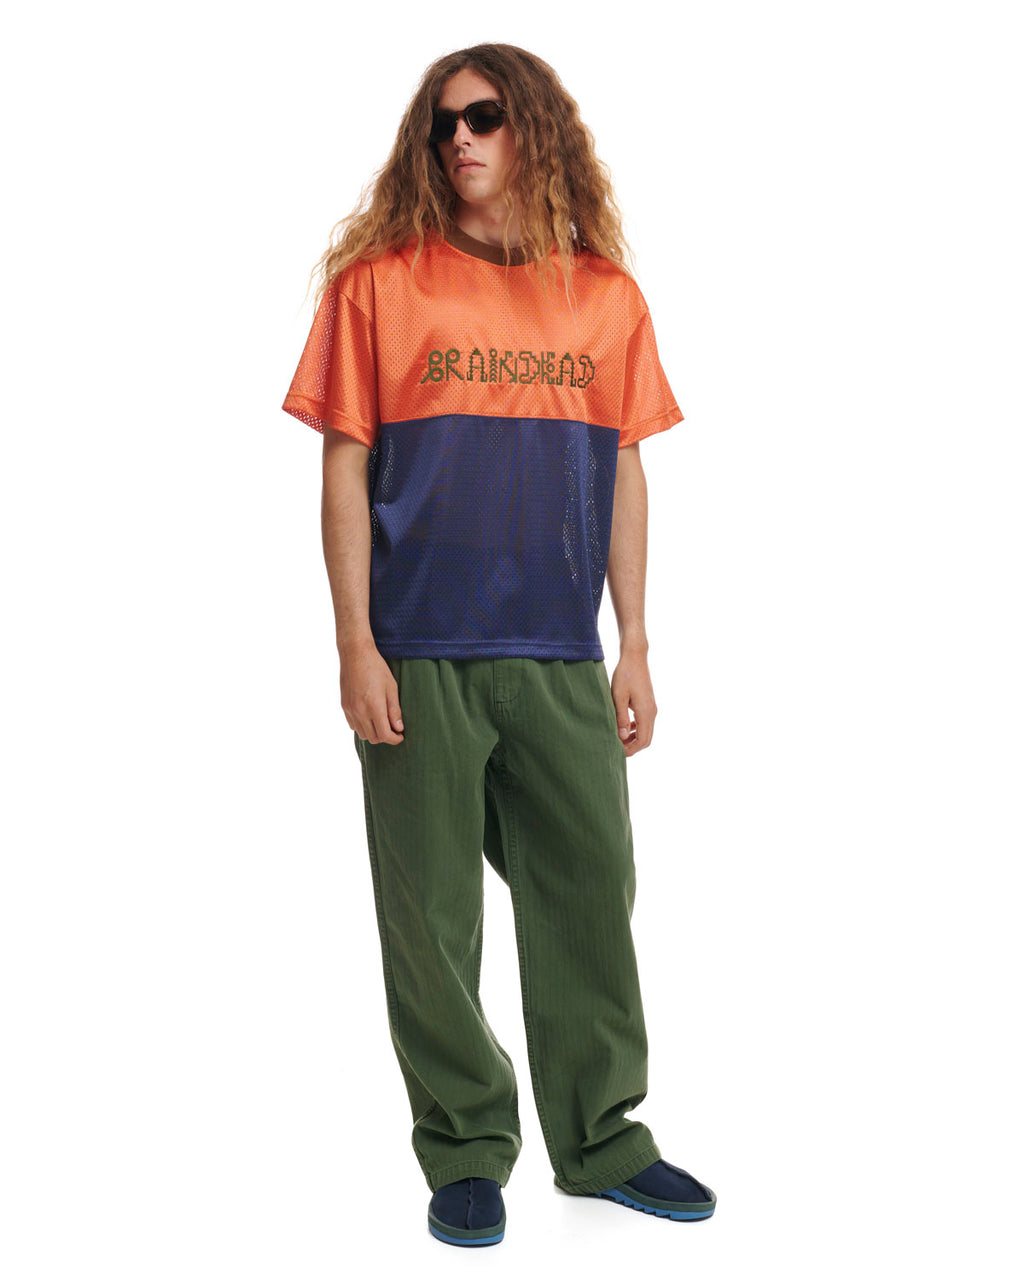 Maze Football Mesh Shirt - Orange/Navy 6